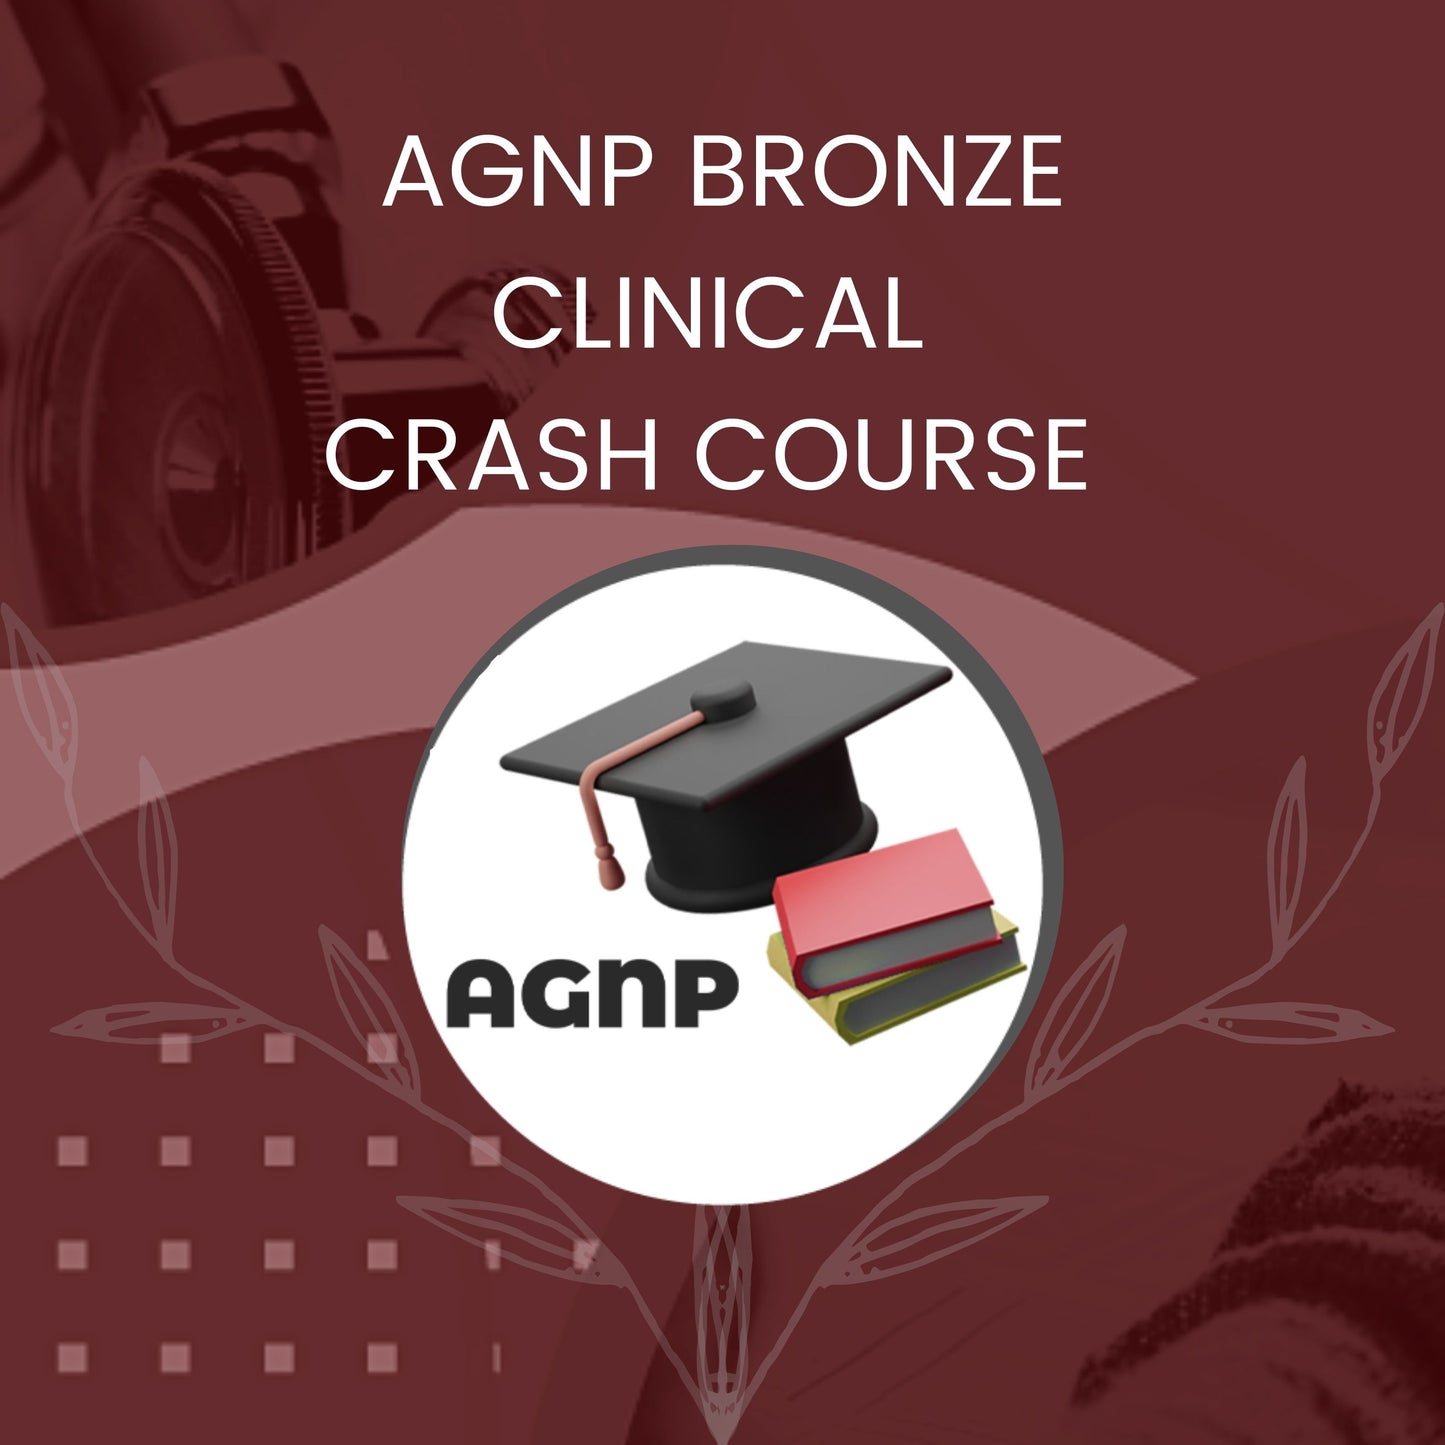 AGNP Bronze Clinical Crash Course